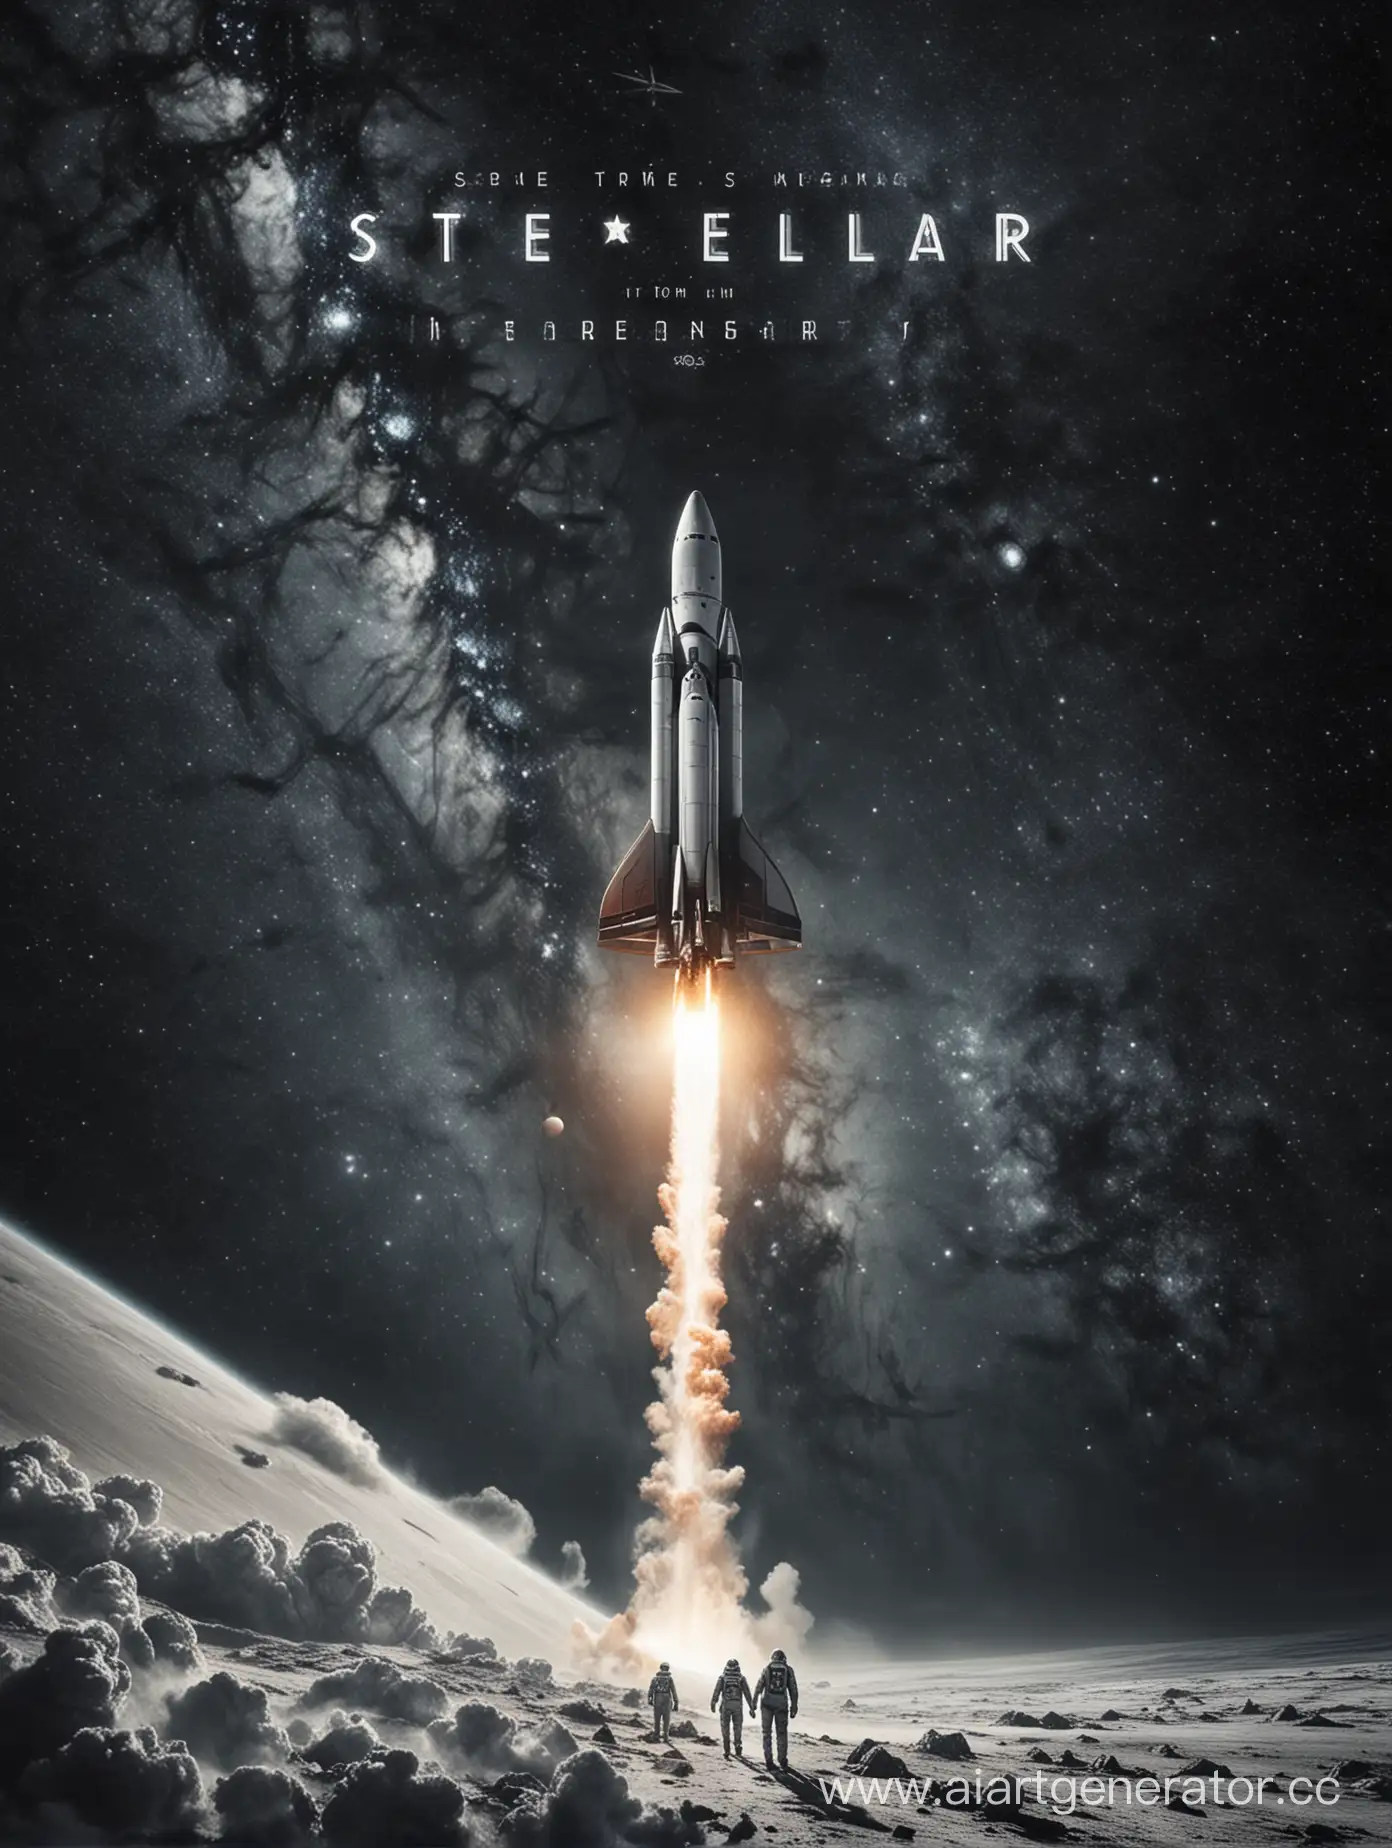 Interstellar-Movie-Screening-Poster-Astronauts-Exploring-Space-with-Rocket